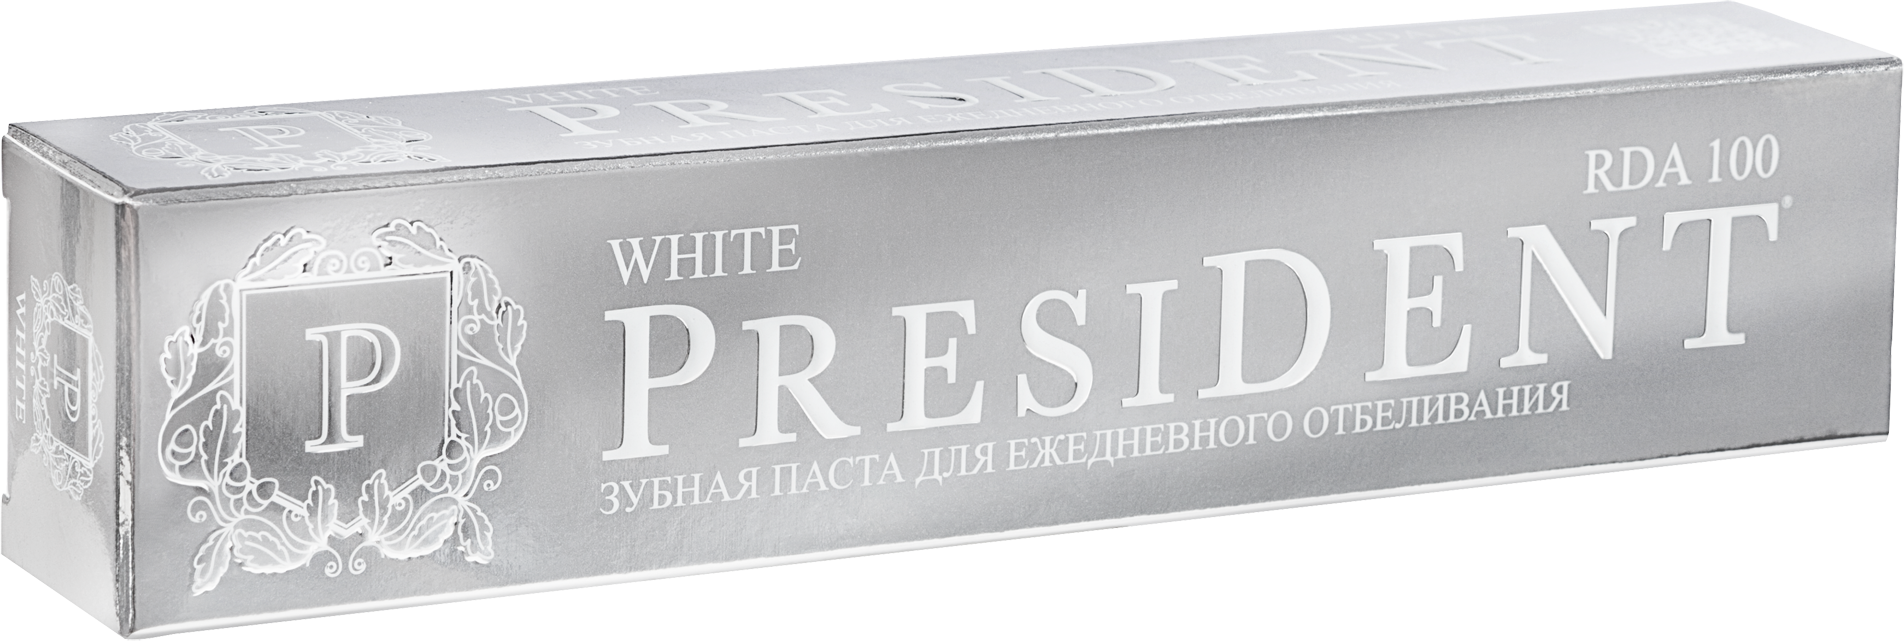 Зубная паста President White для ежедневного отбеливания, 75 мл - фото №13